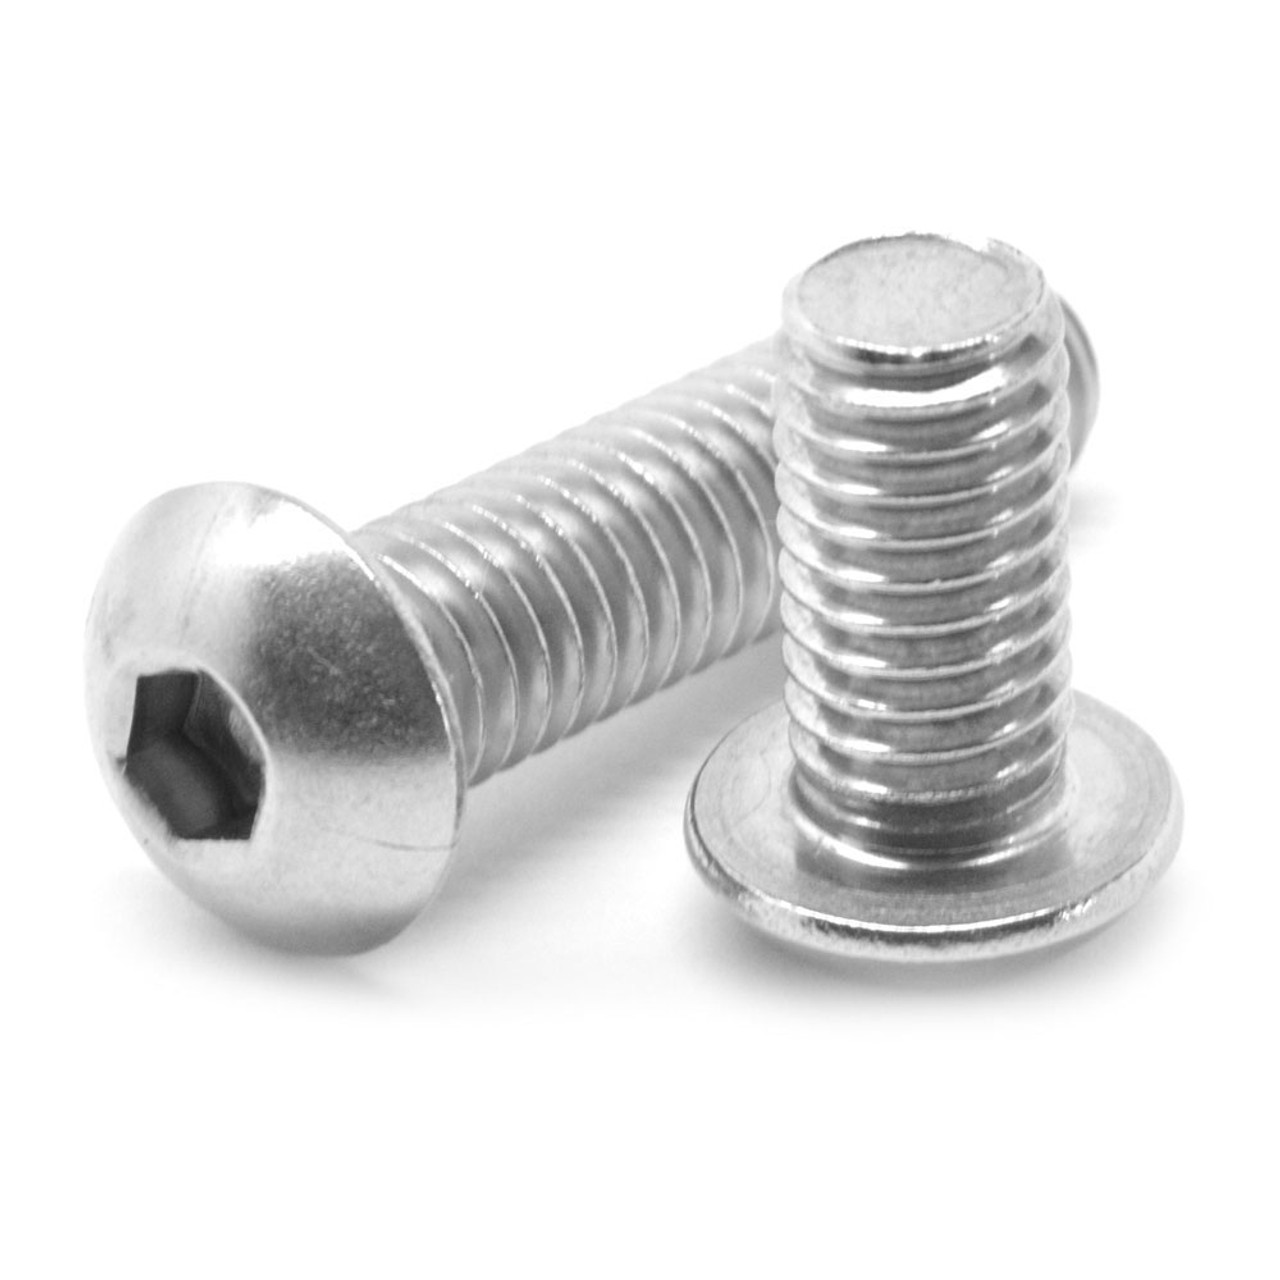  Socket Button Head Cap Screw, 1/4-20 x 5/8, Stainless Steel  18-8, Hex Socket (Quantity: 100) Coarse Thread, 1/4 inch Hexagonal Allen  Bolt, Length: 5/8 inch, Full Thread : Industrial & Scientific